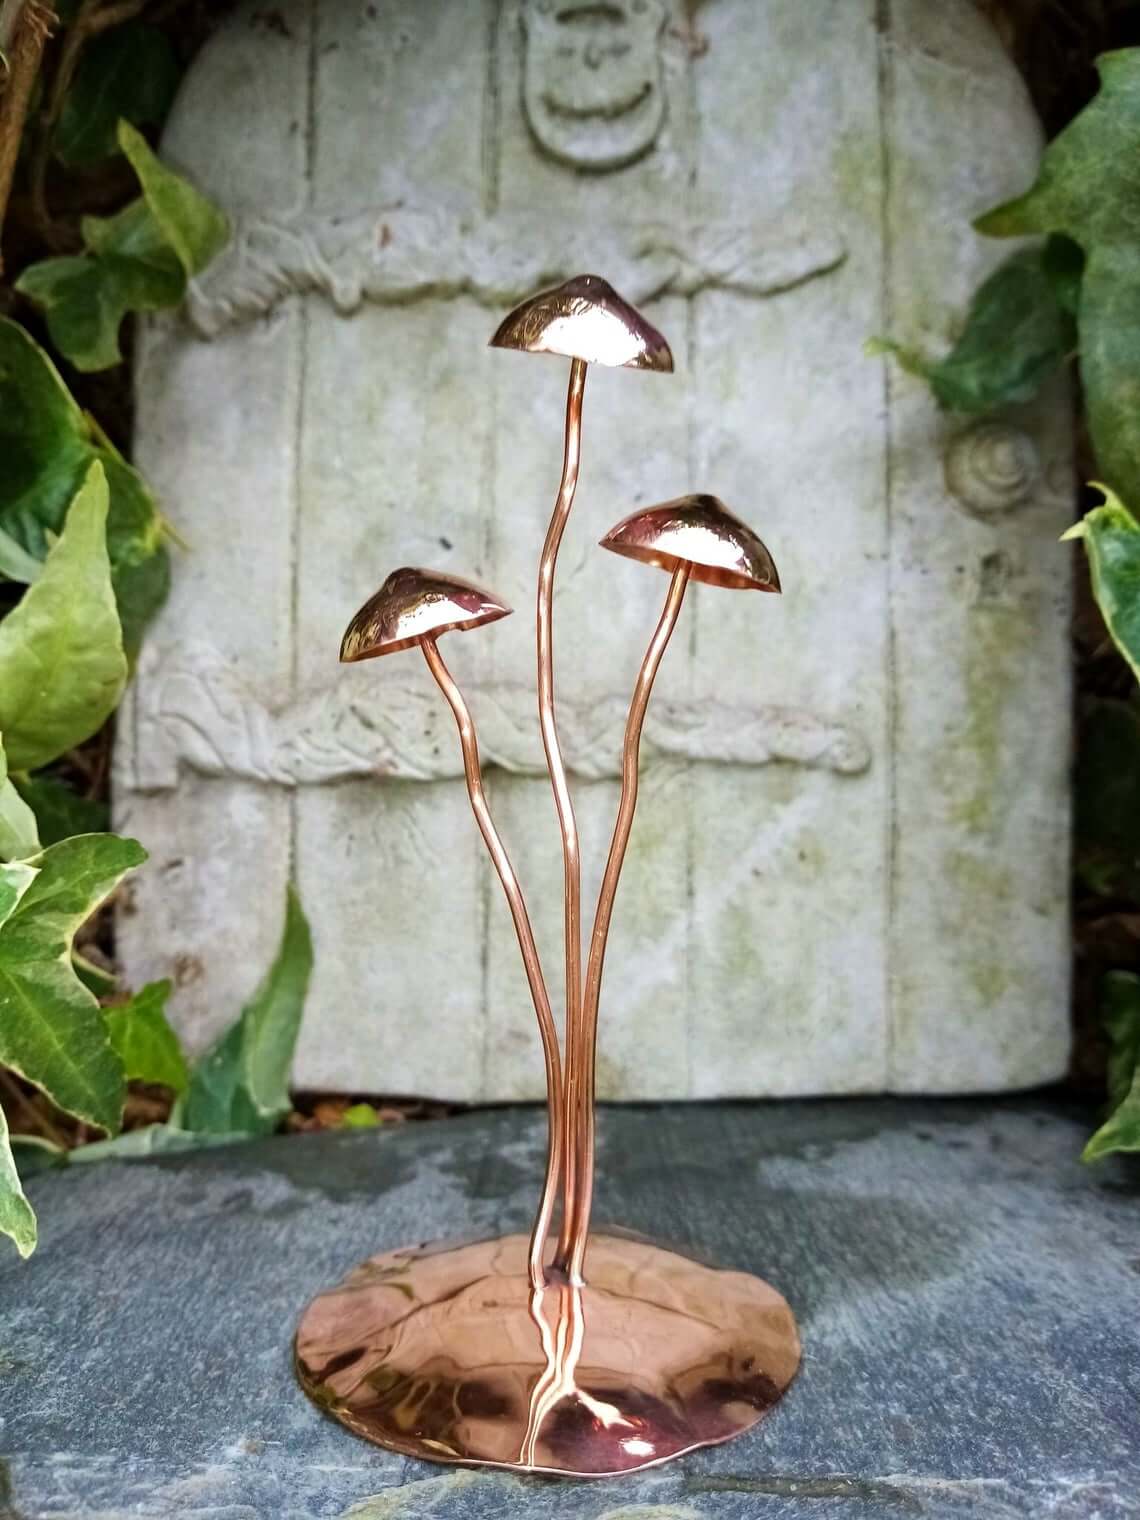 Rustic Handmade Recycled Metal & Wood Garden Mushroom Sculptures